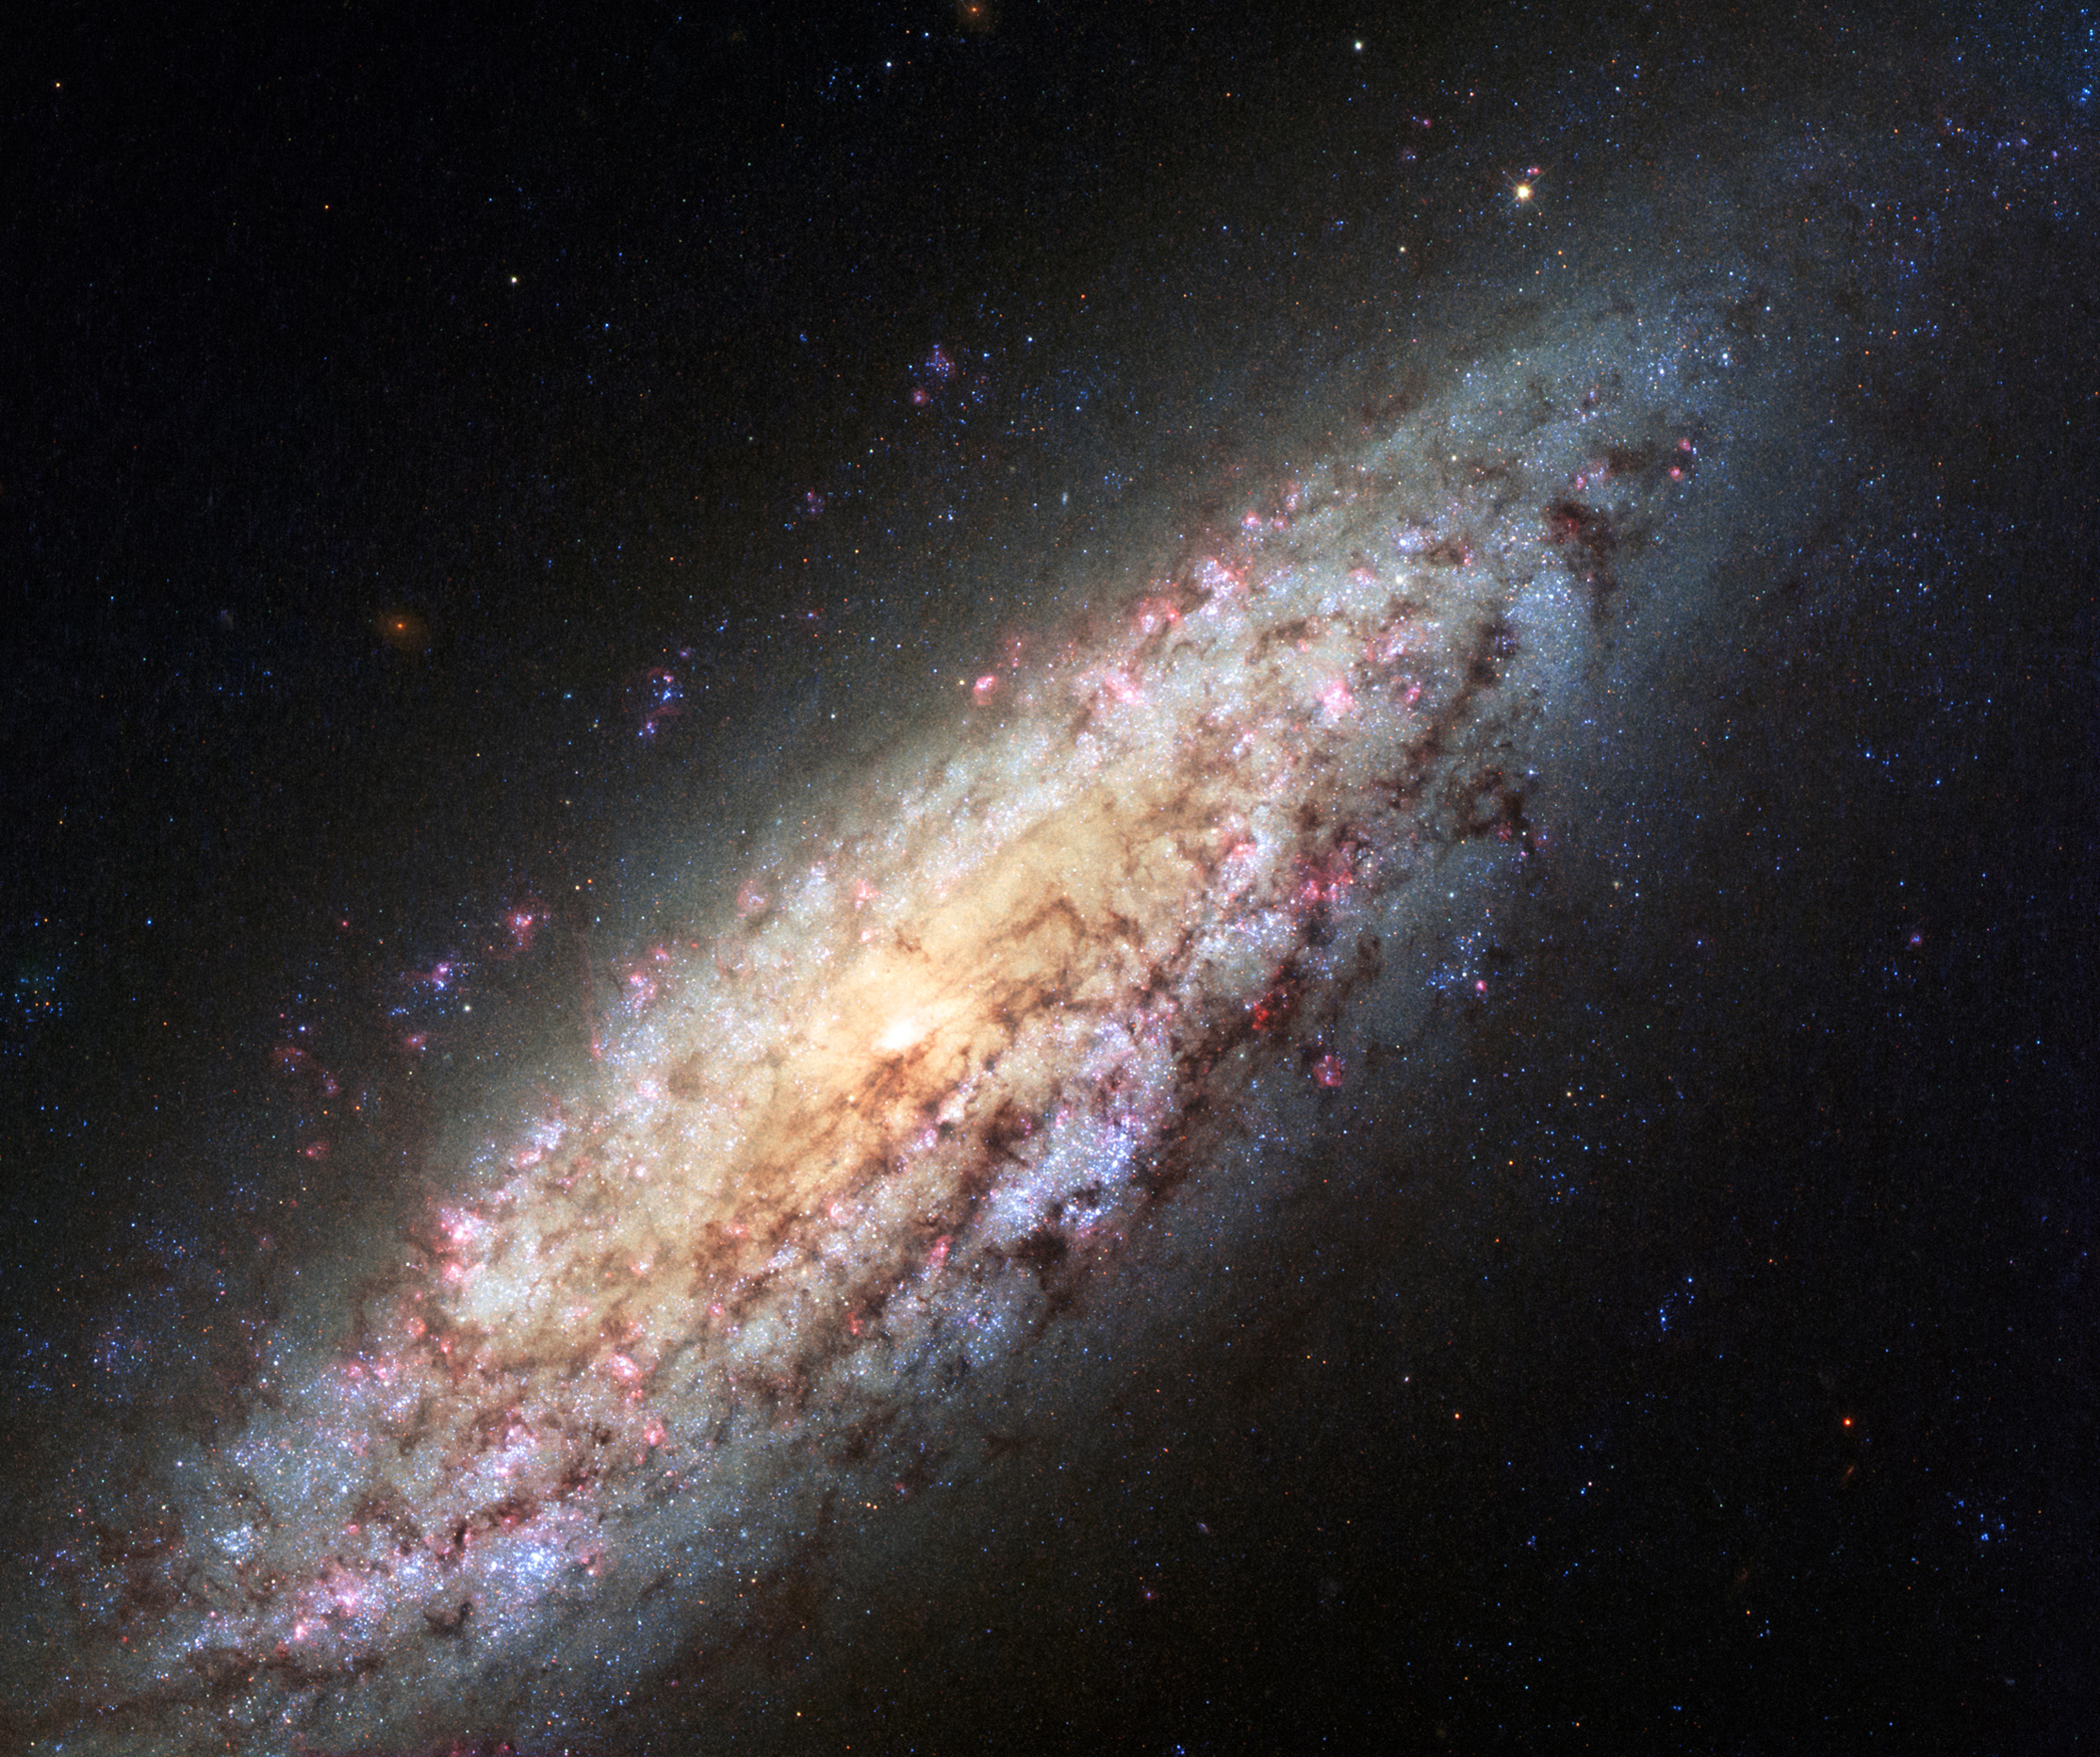 Space Galaxy NASA Hubble Space Telescope NGC 6503 2228x1864